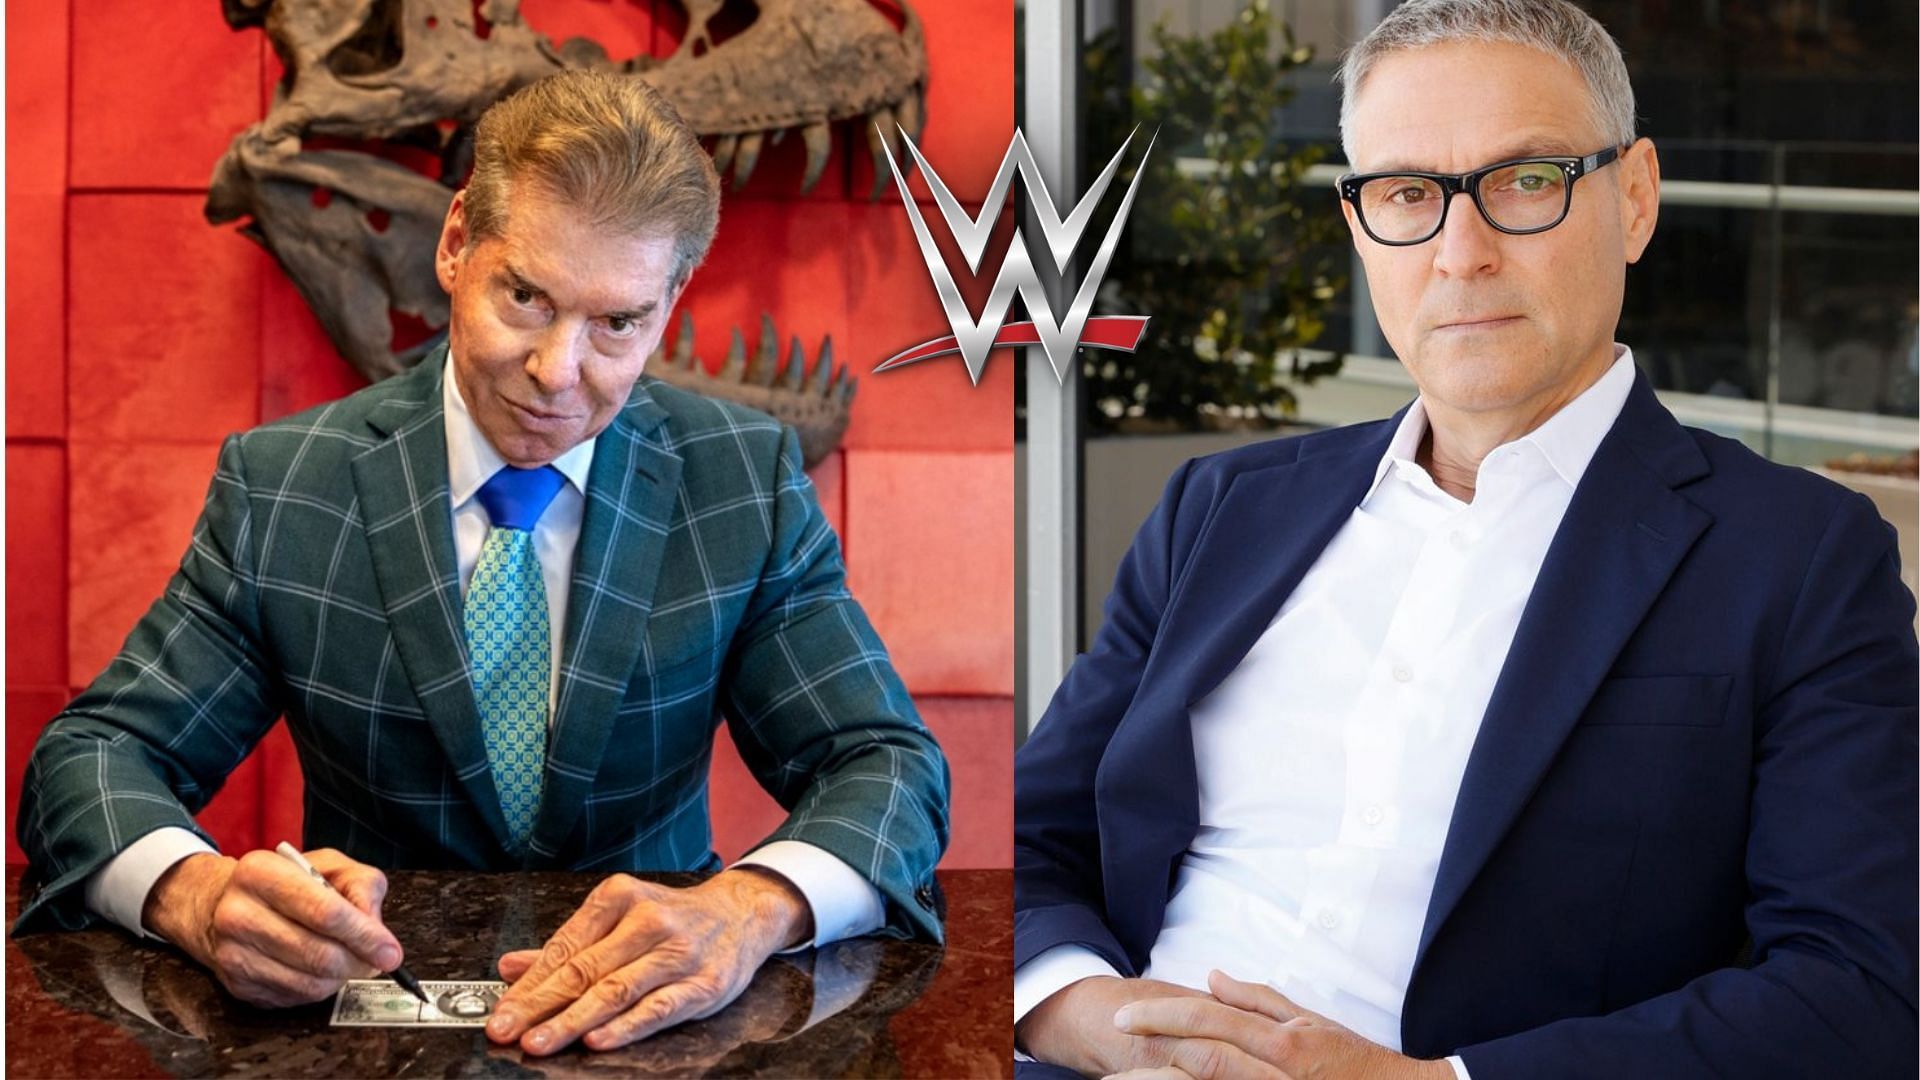 Vince McMahon and Endeavor CEO Ari Emanuel